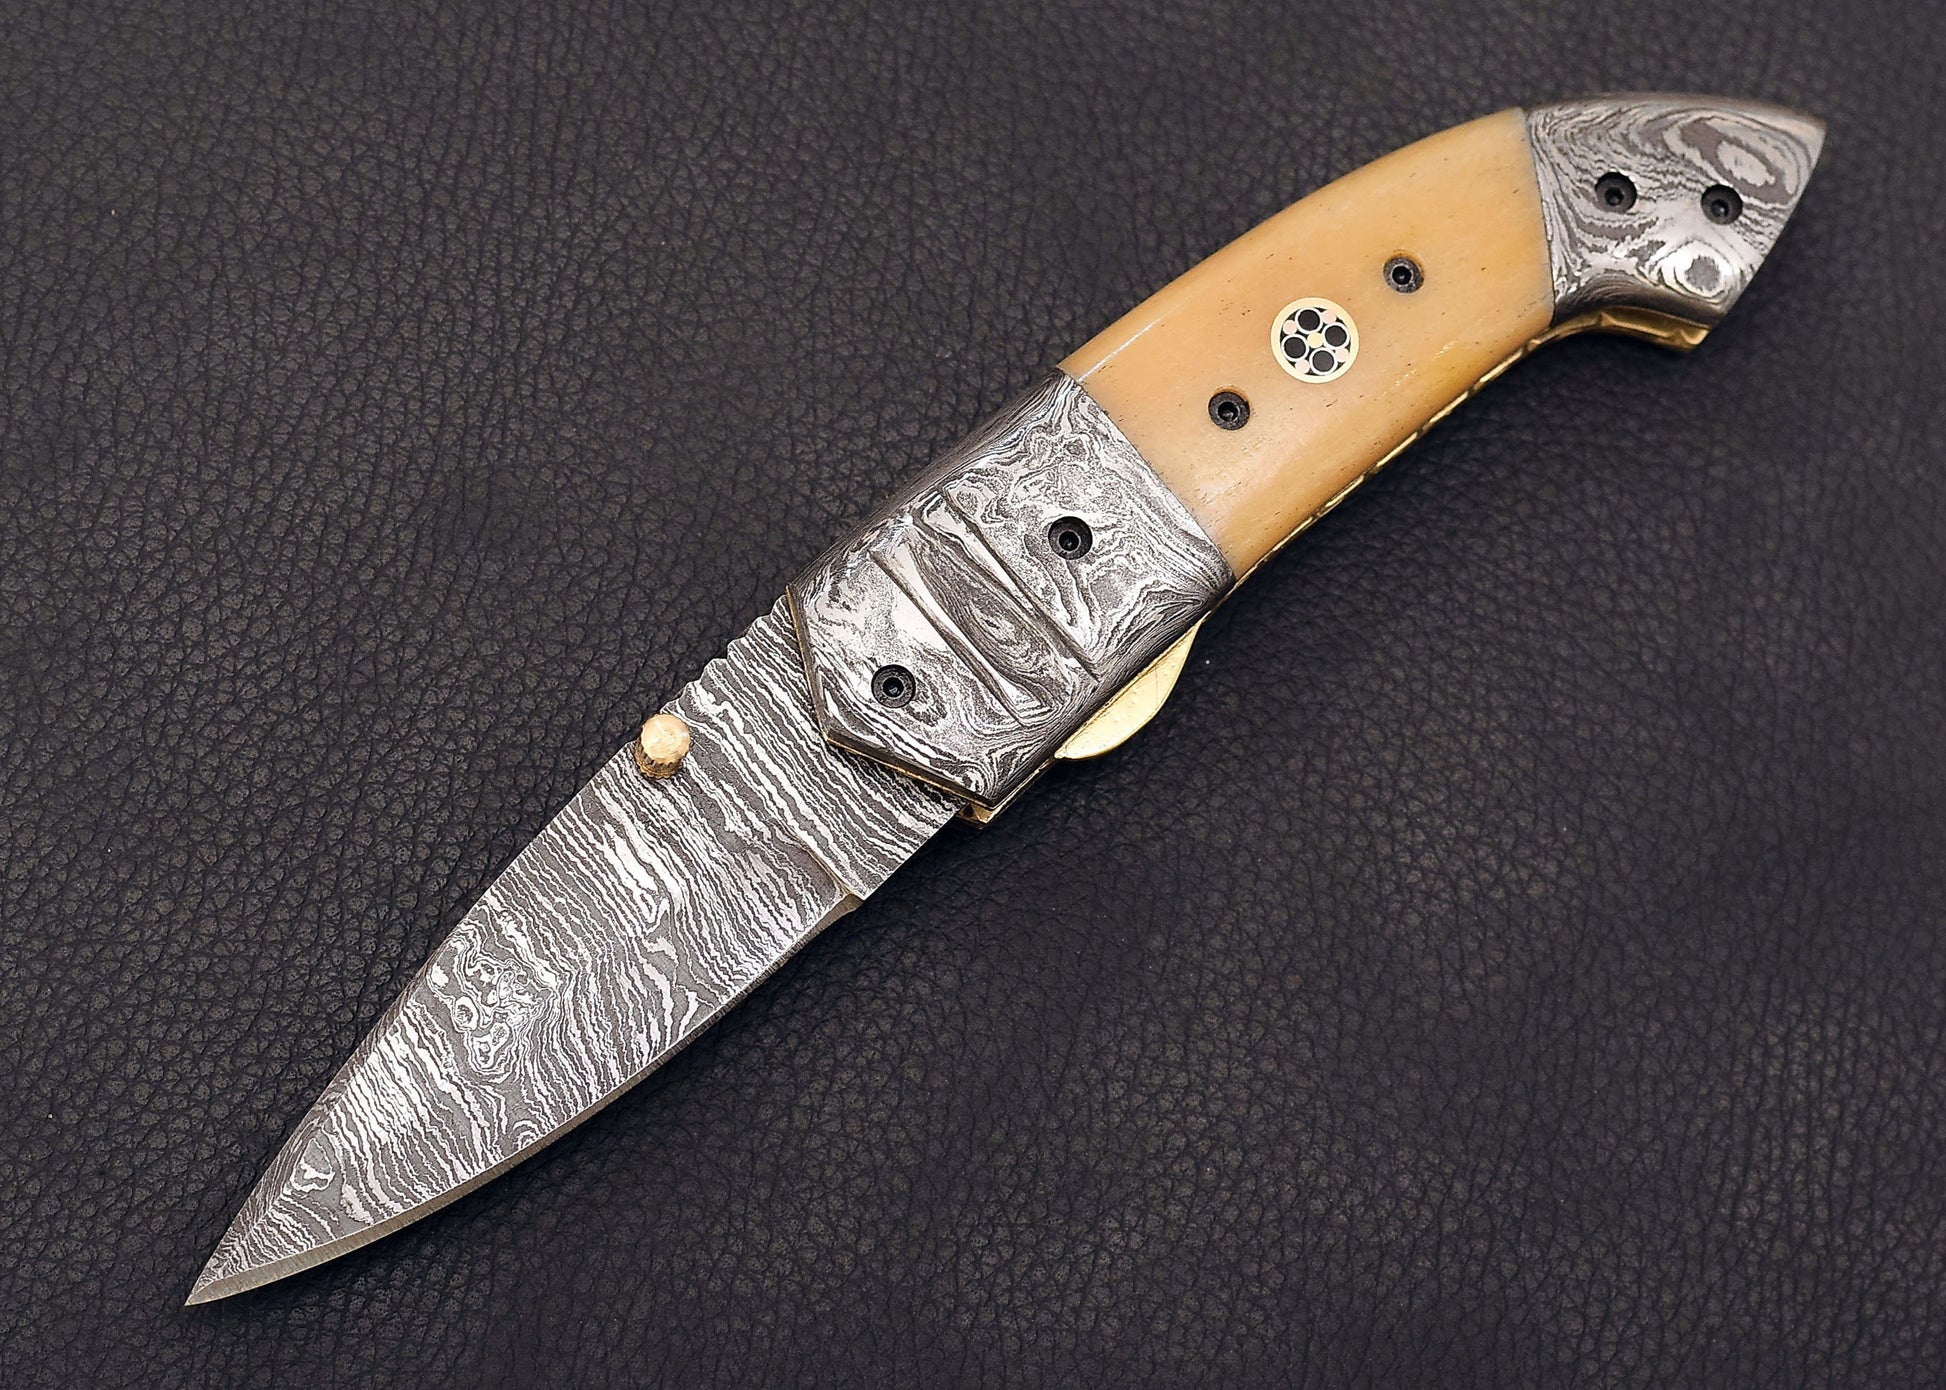 Damascus Steel folding knife with Cow bone handle